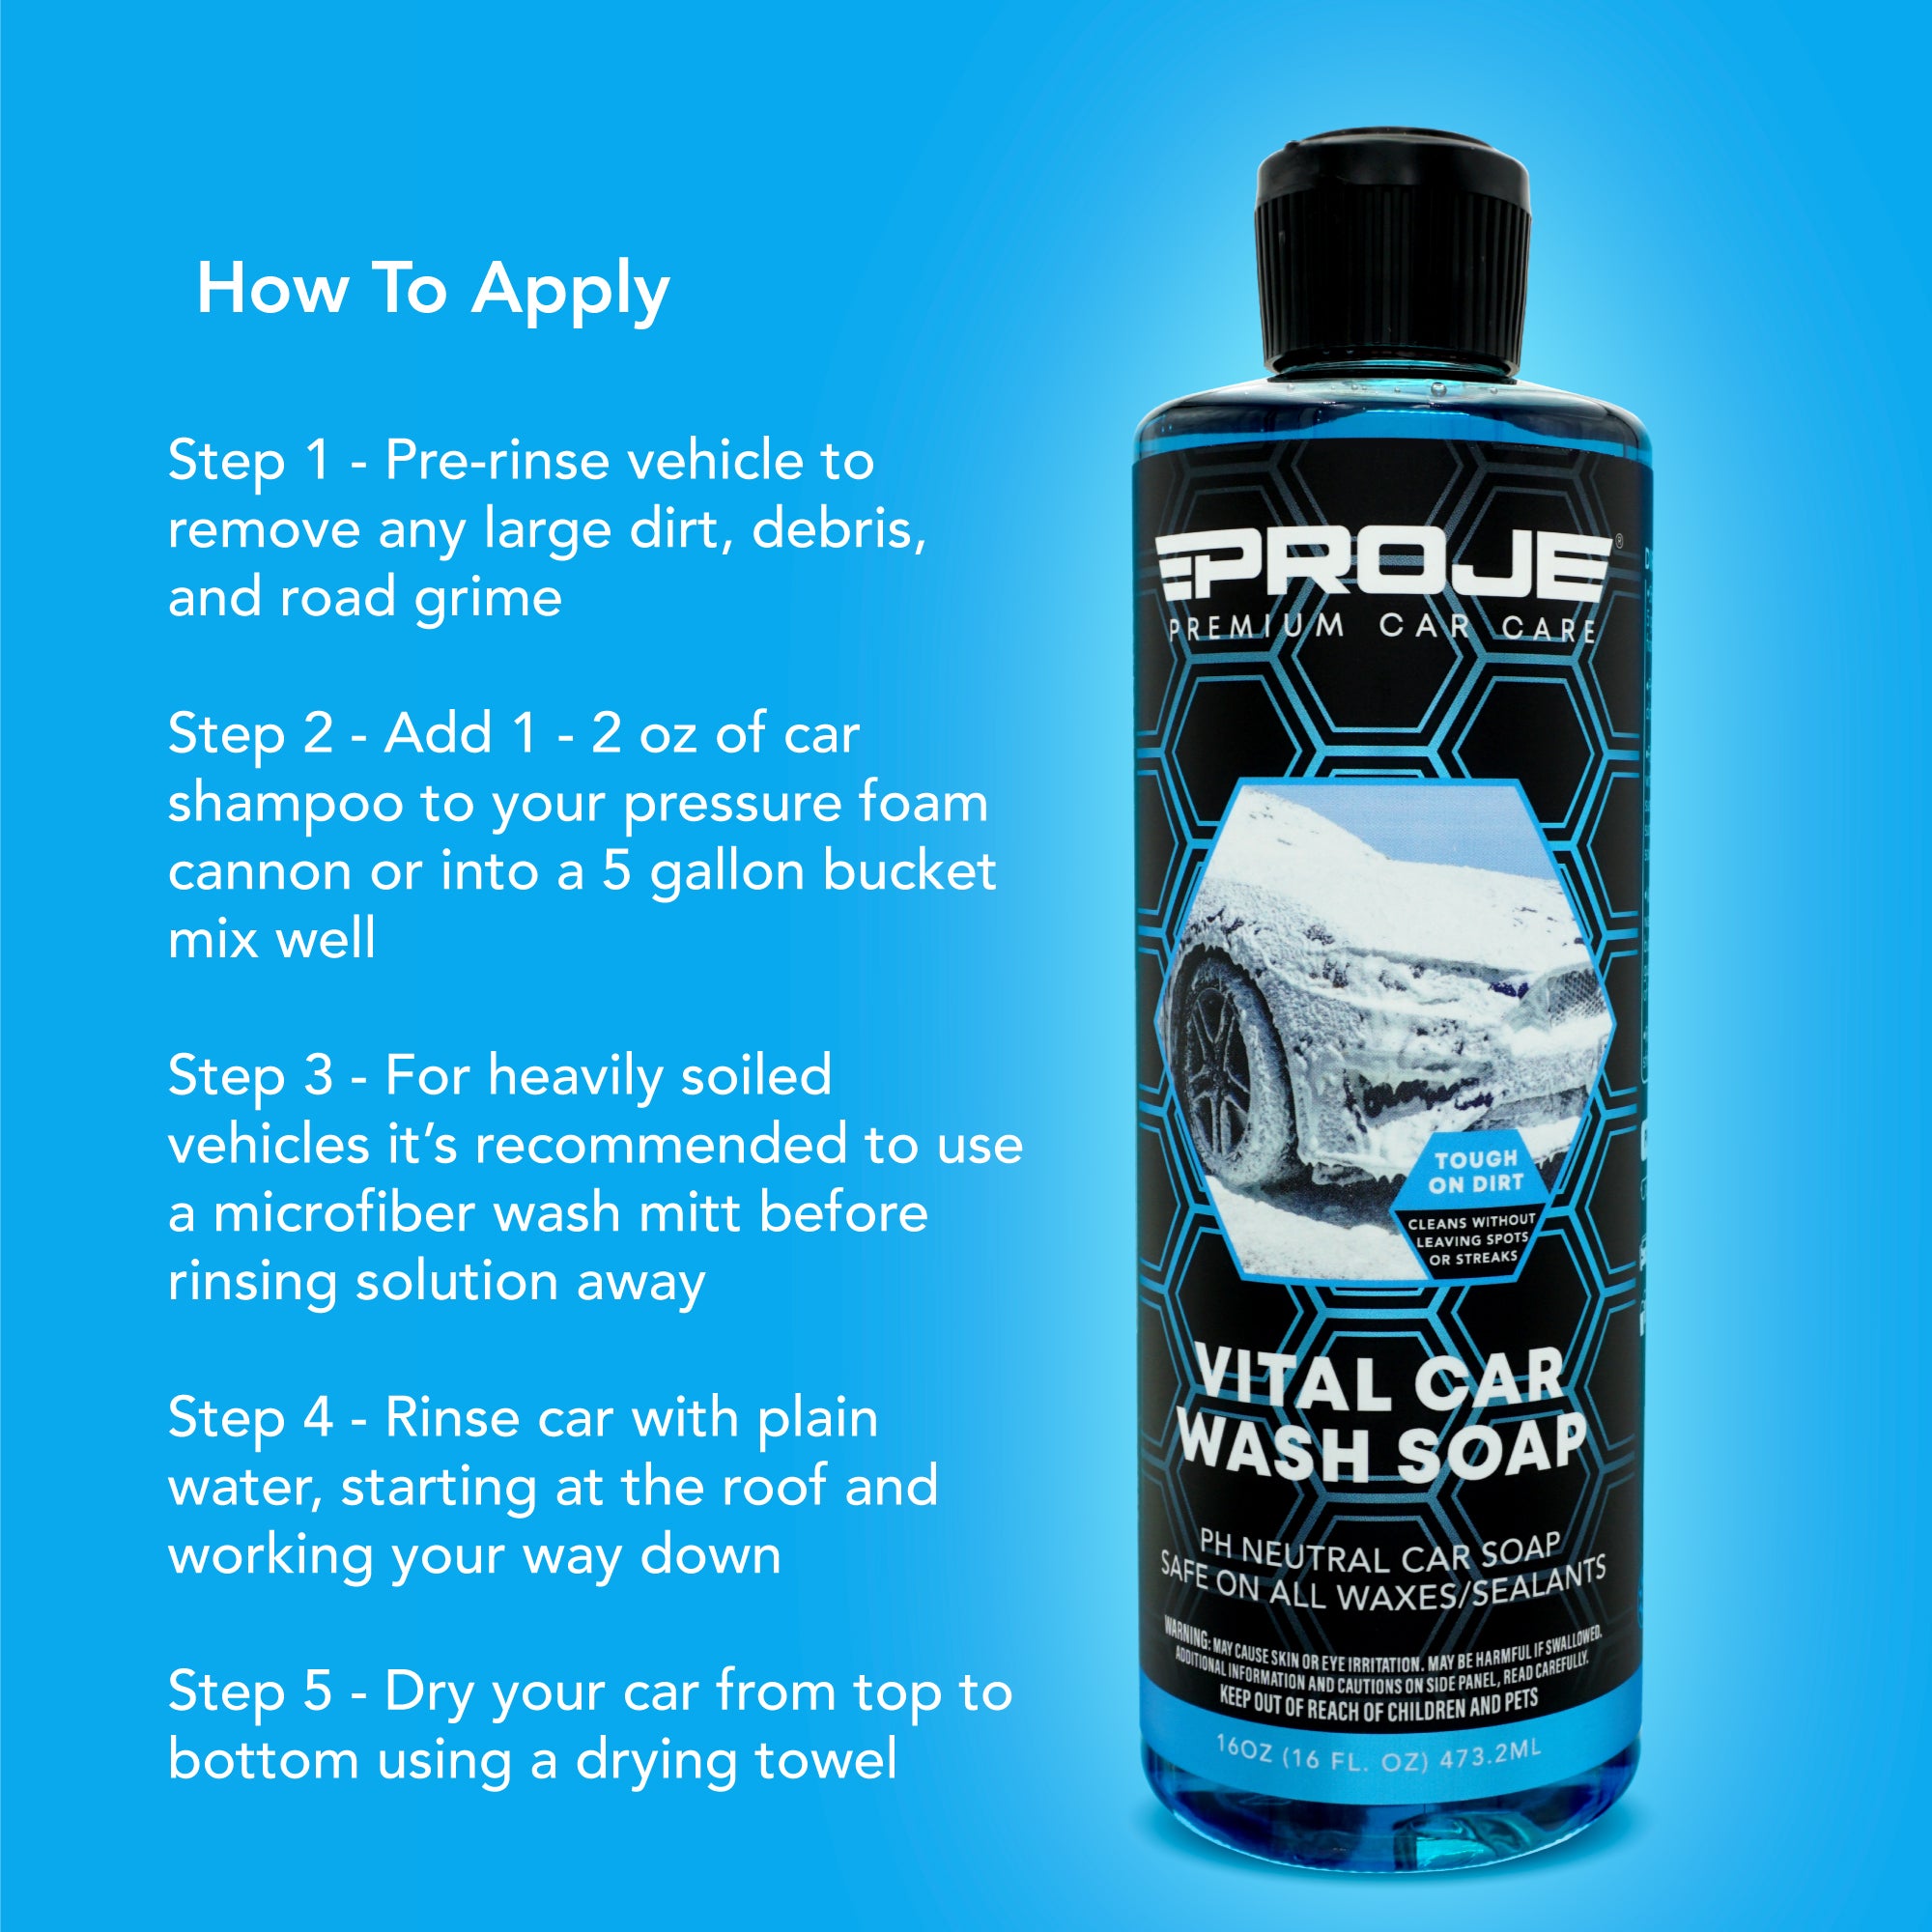 Vital Car Wash Soap - PH Balanced - Wont Strip Waxes or Ceramic